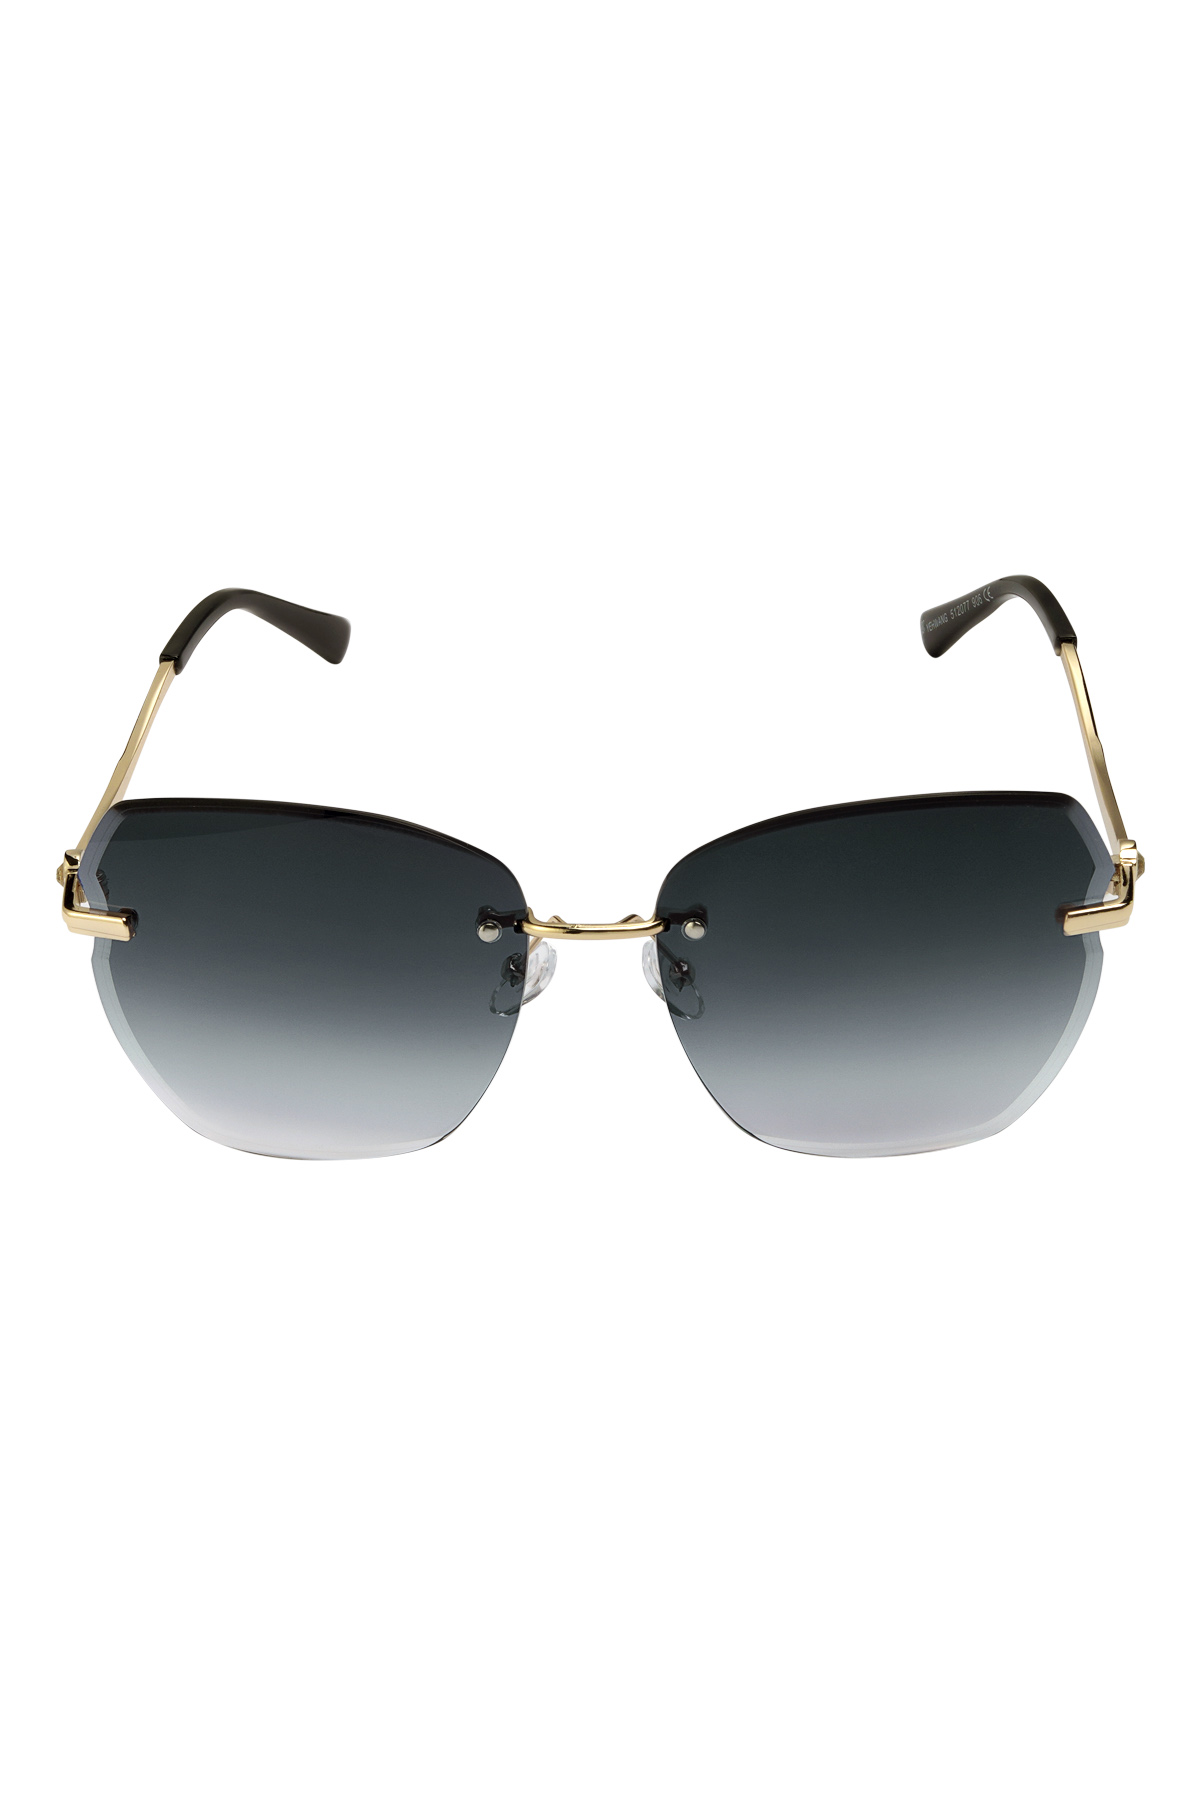 Statement sunglasses gold hardware - gray h5 Picture5